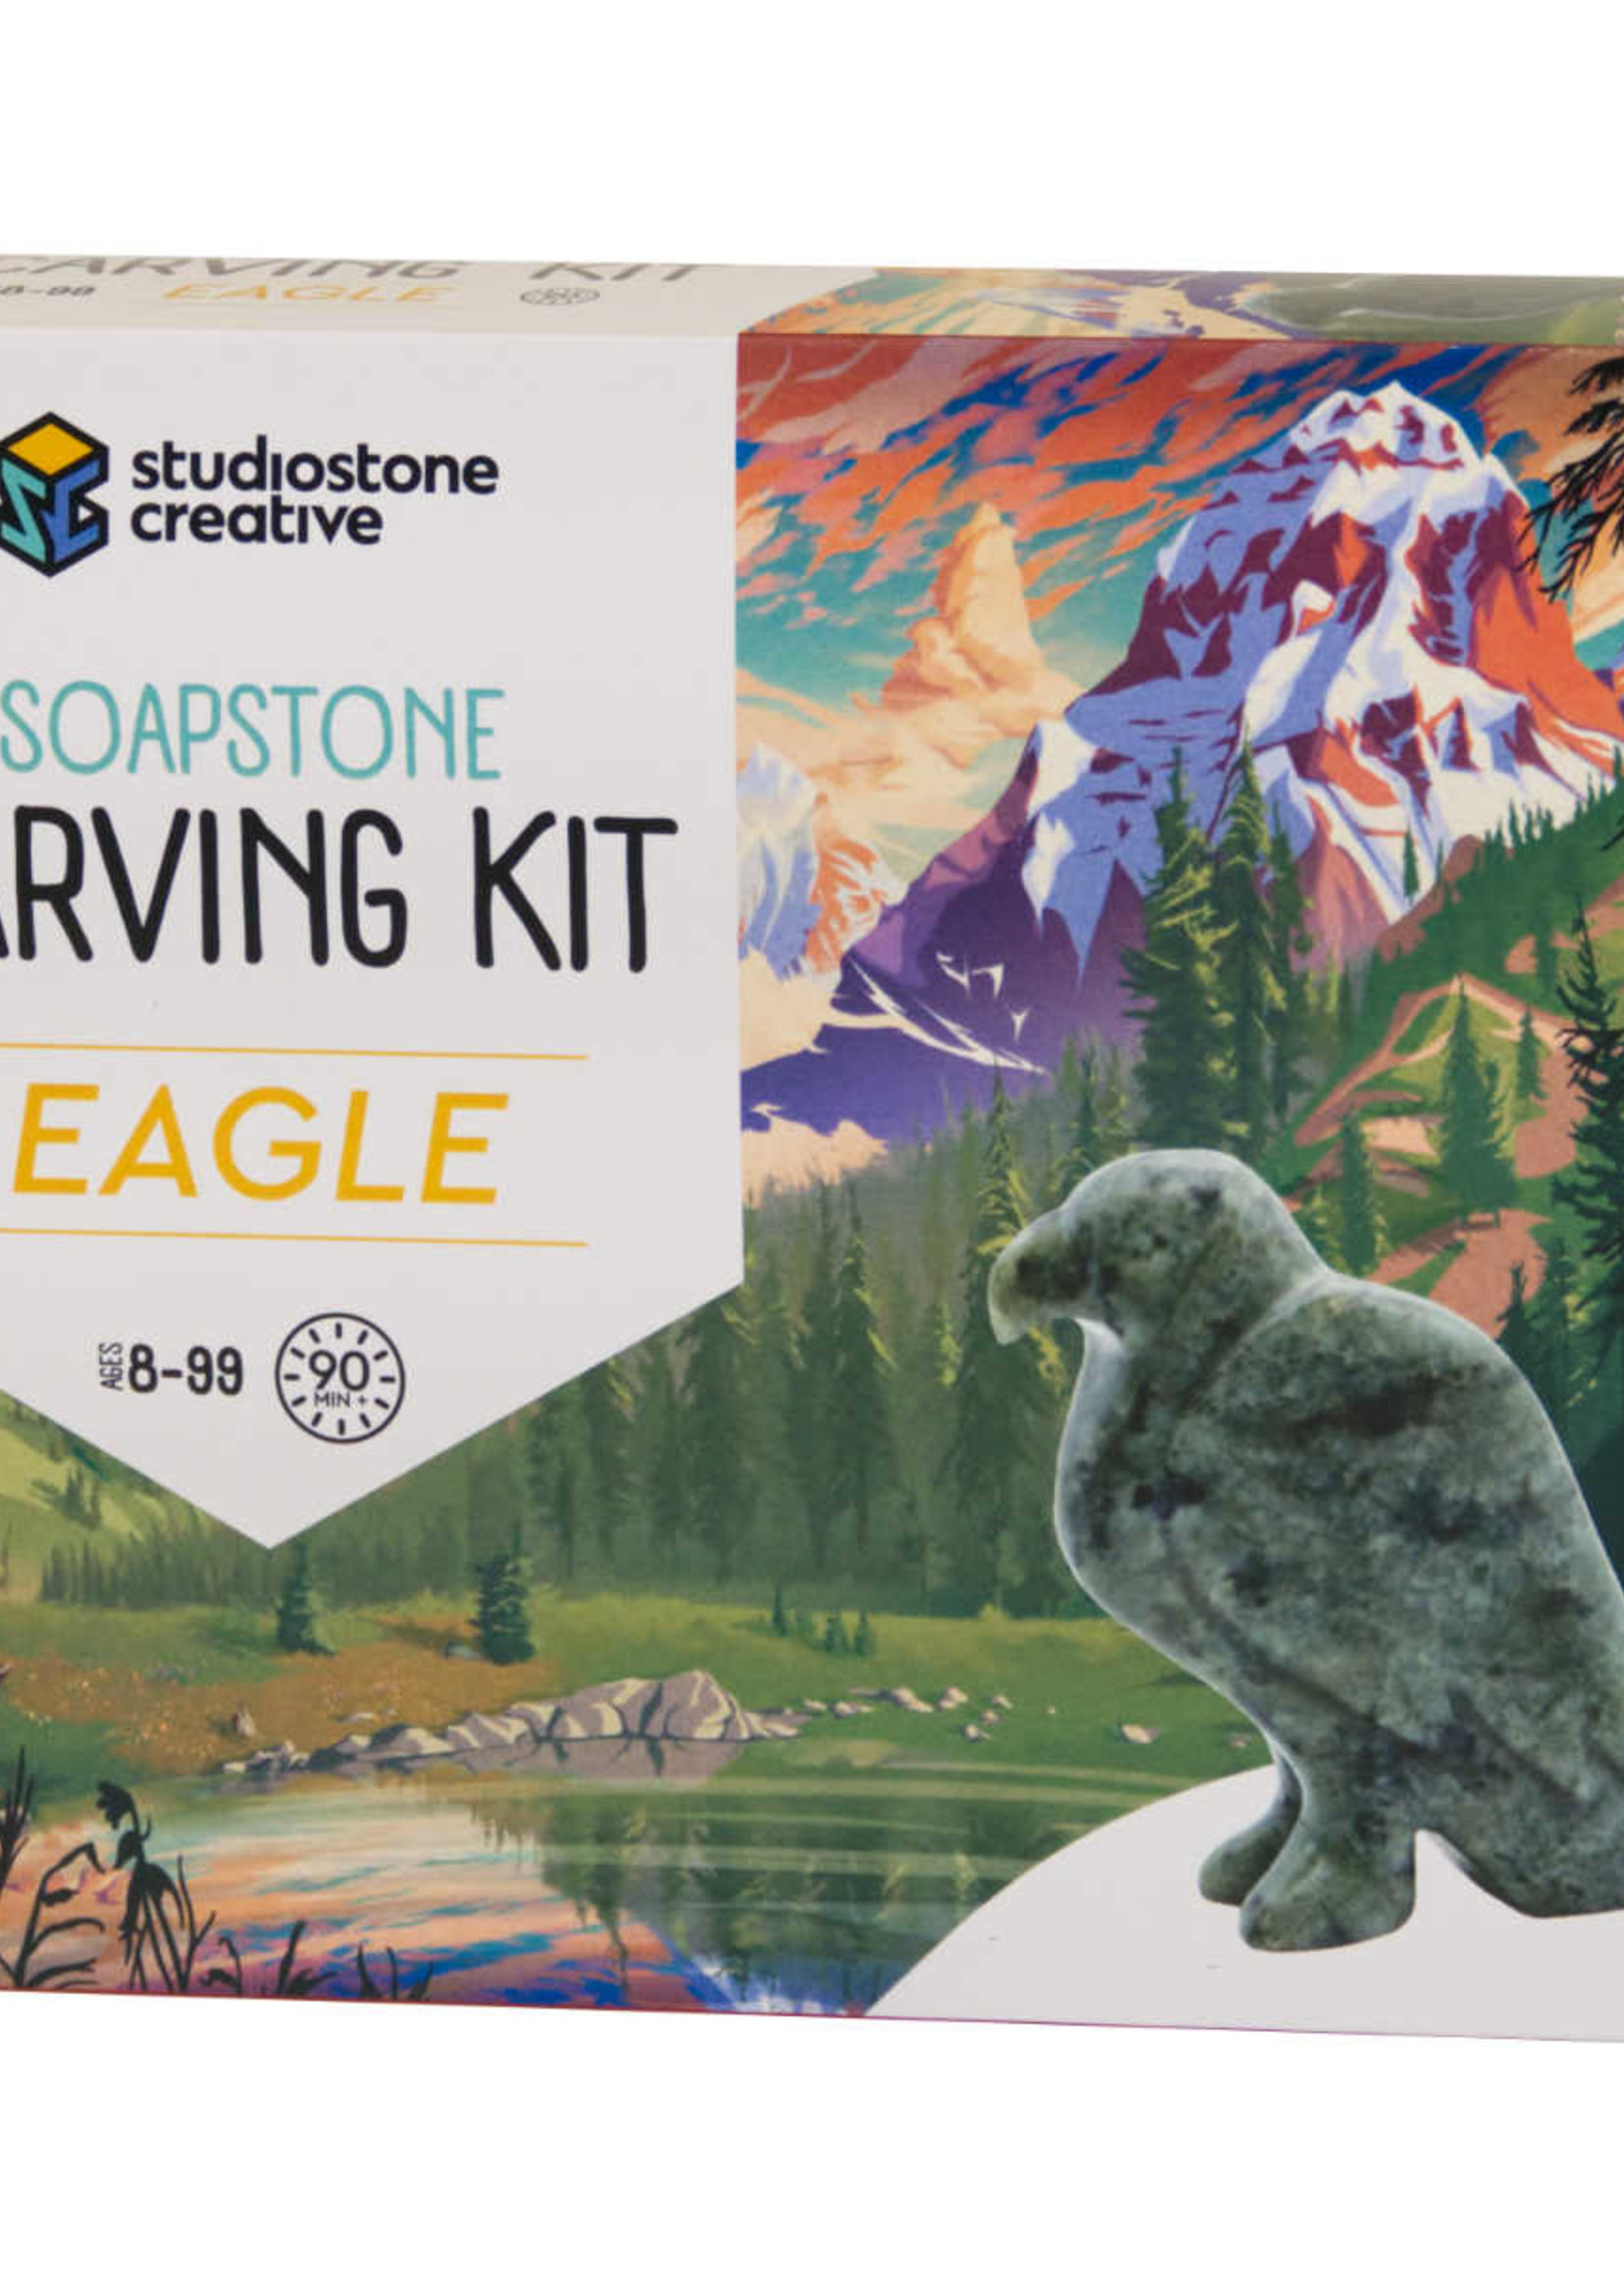 studiostone creative Soapstone Carving Kit: Eagle